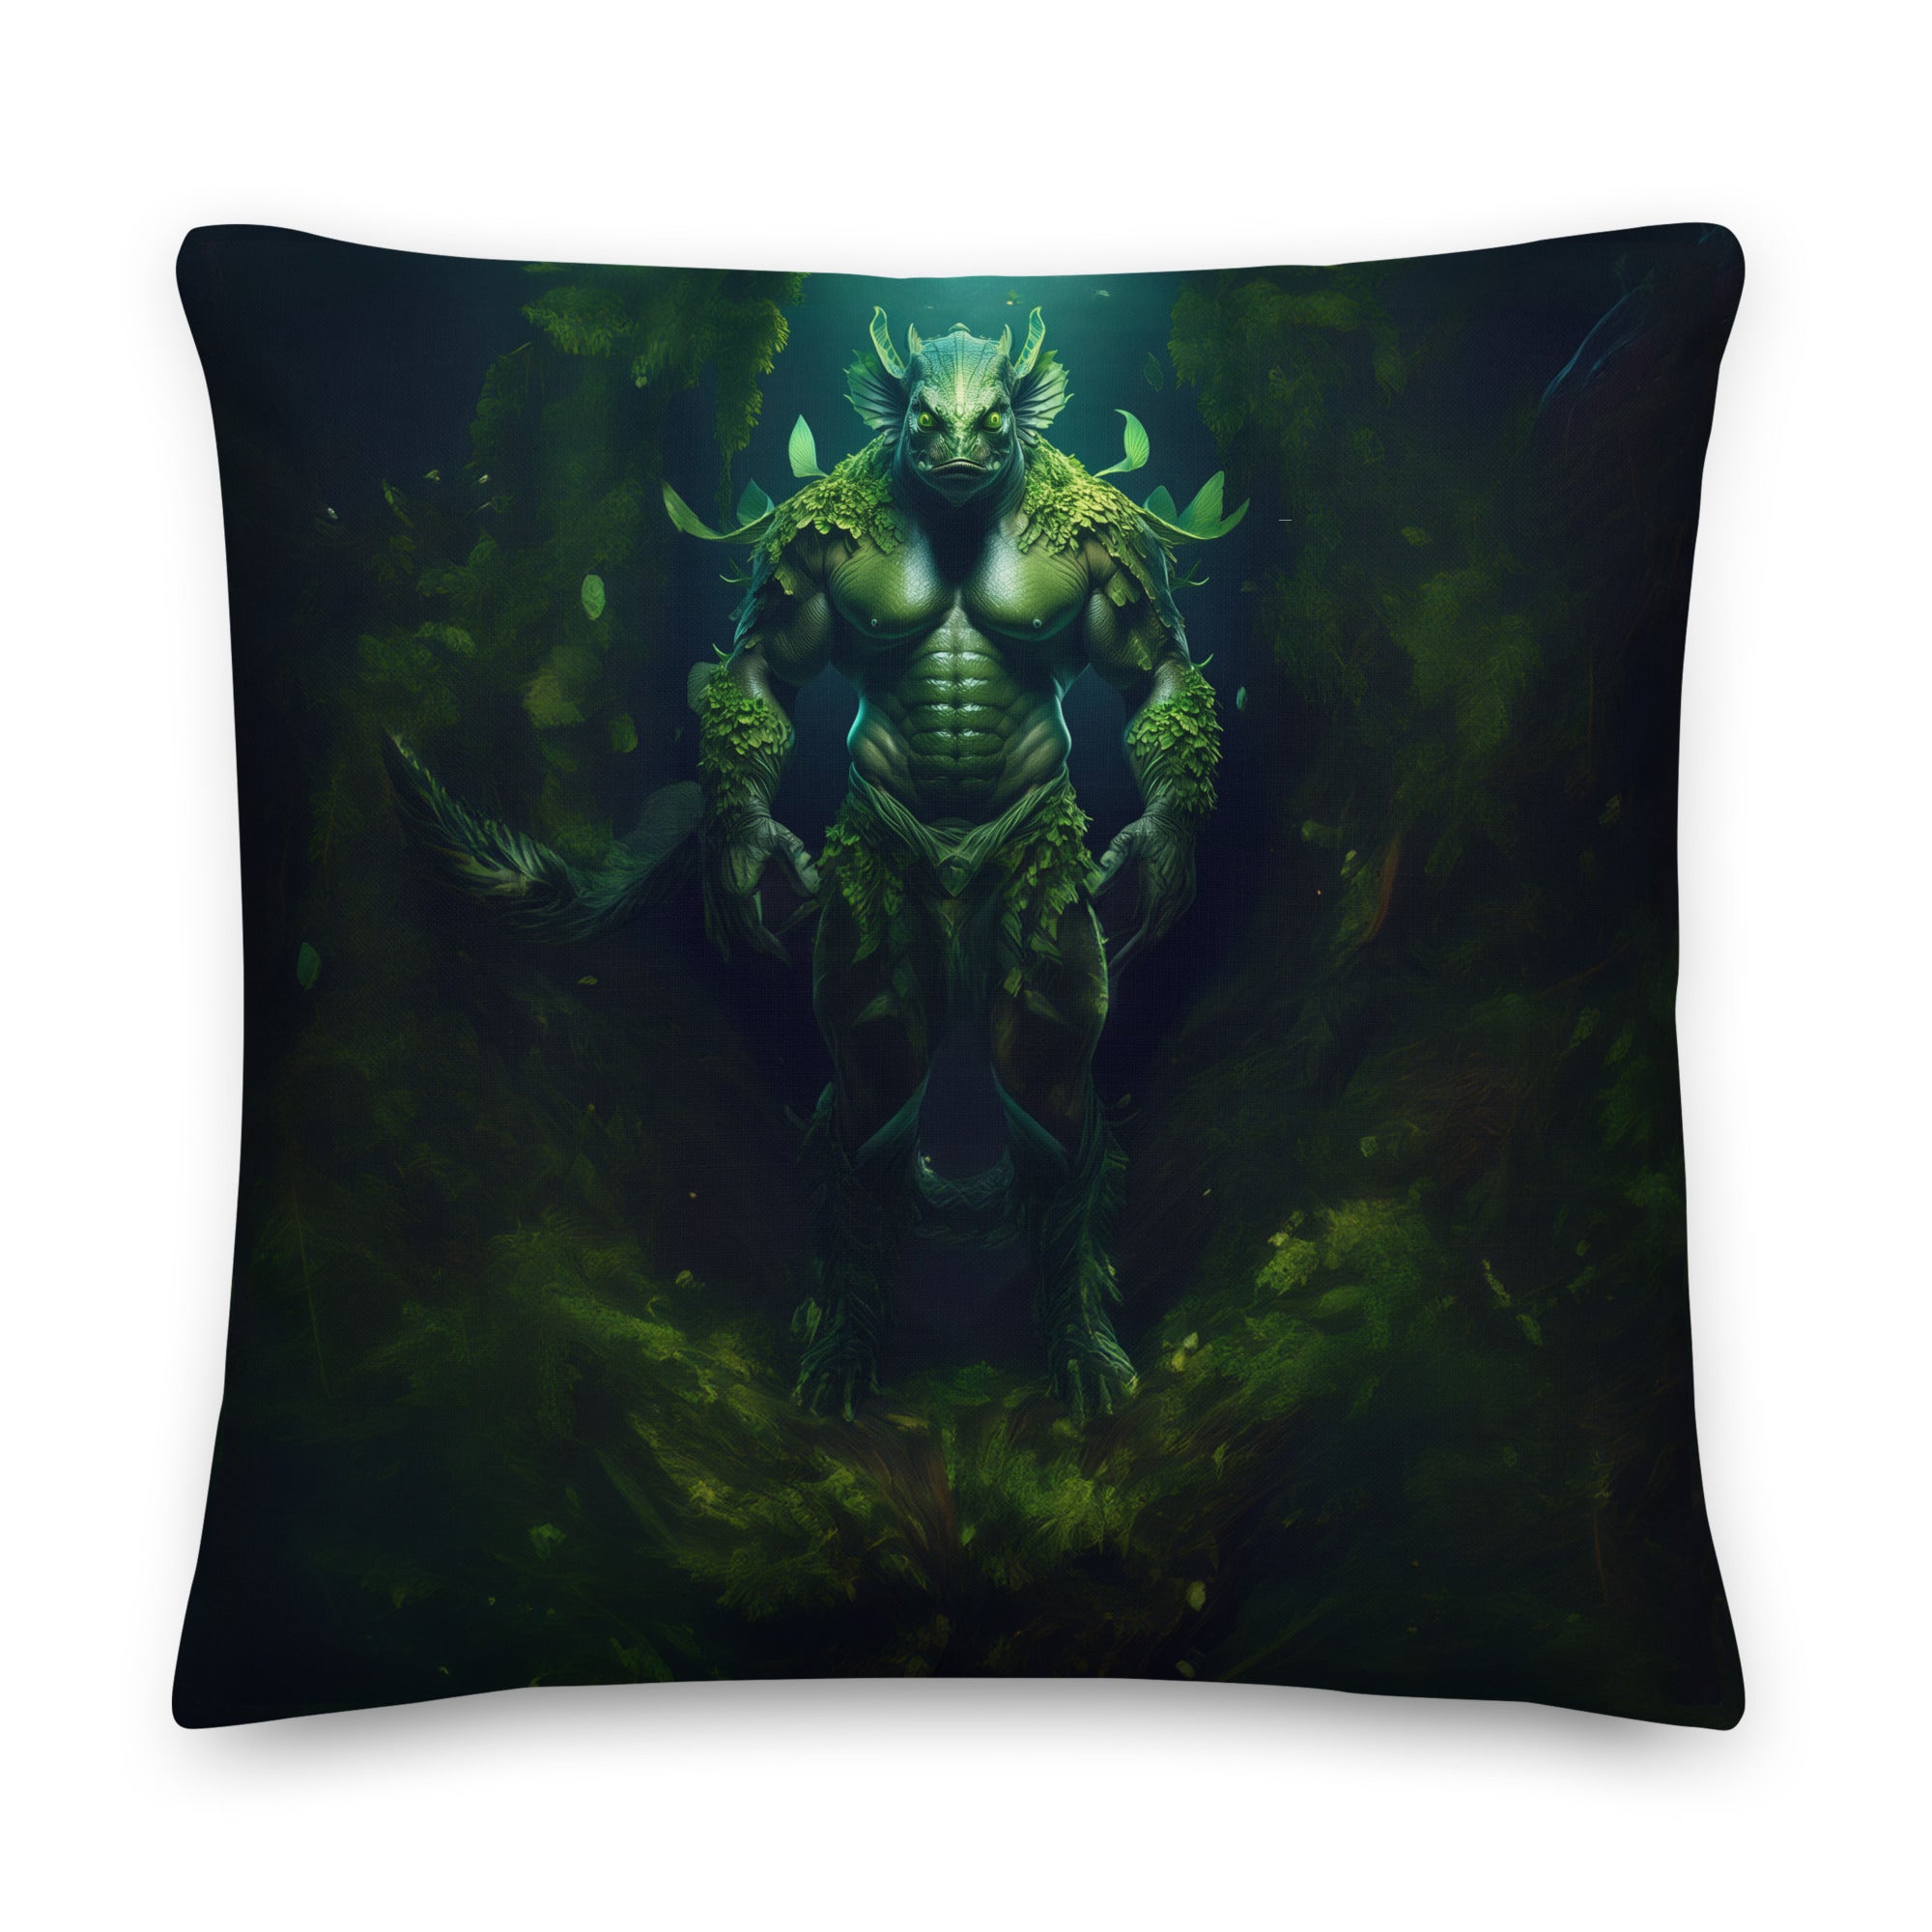 The Monster Squad "The Creature" Premium Pillow